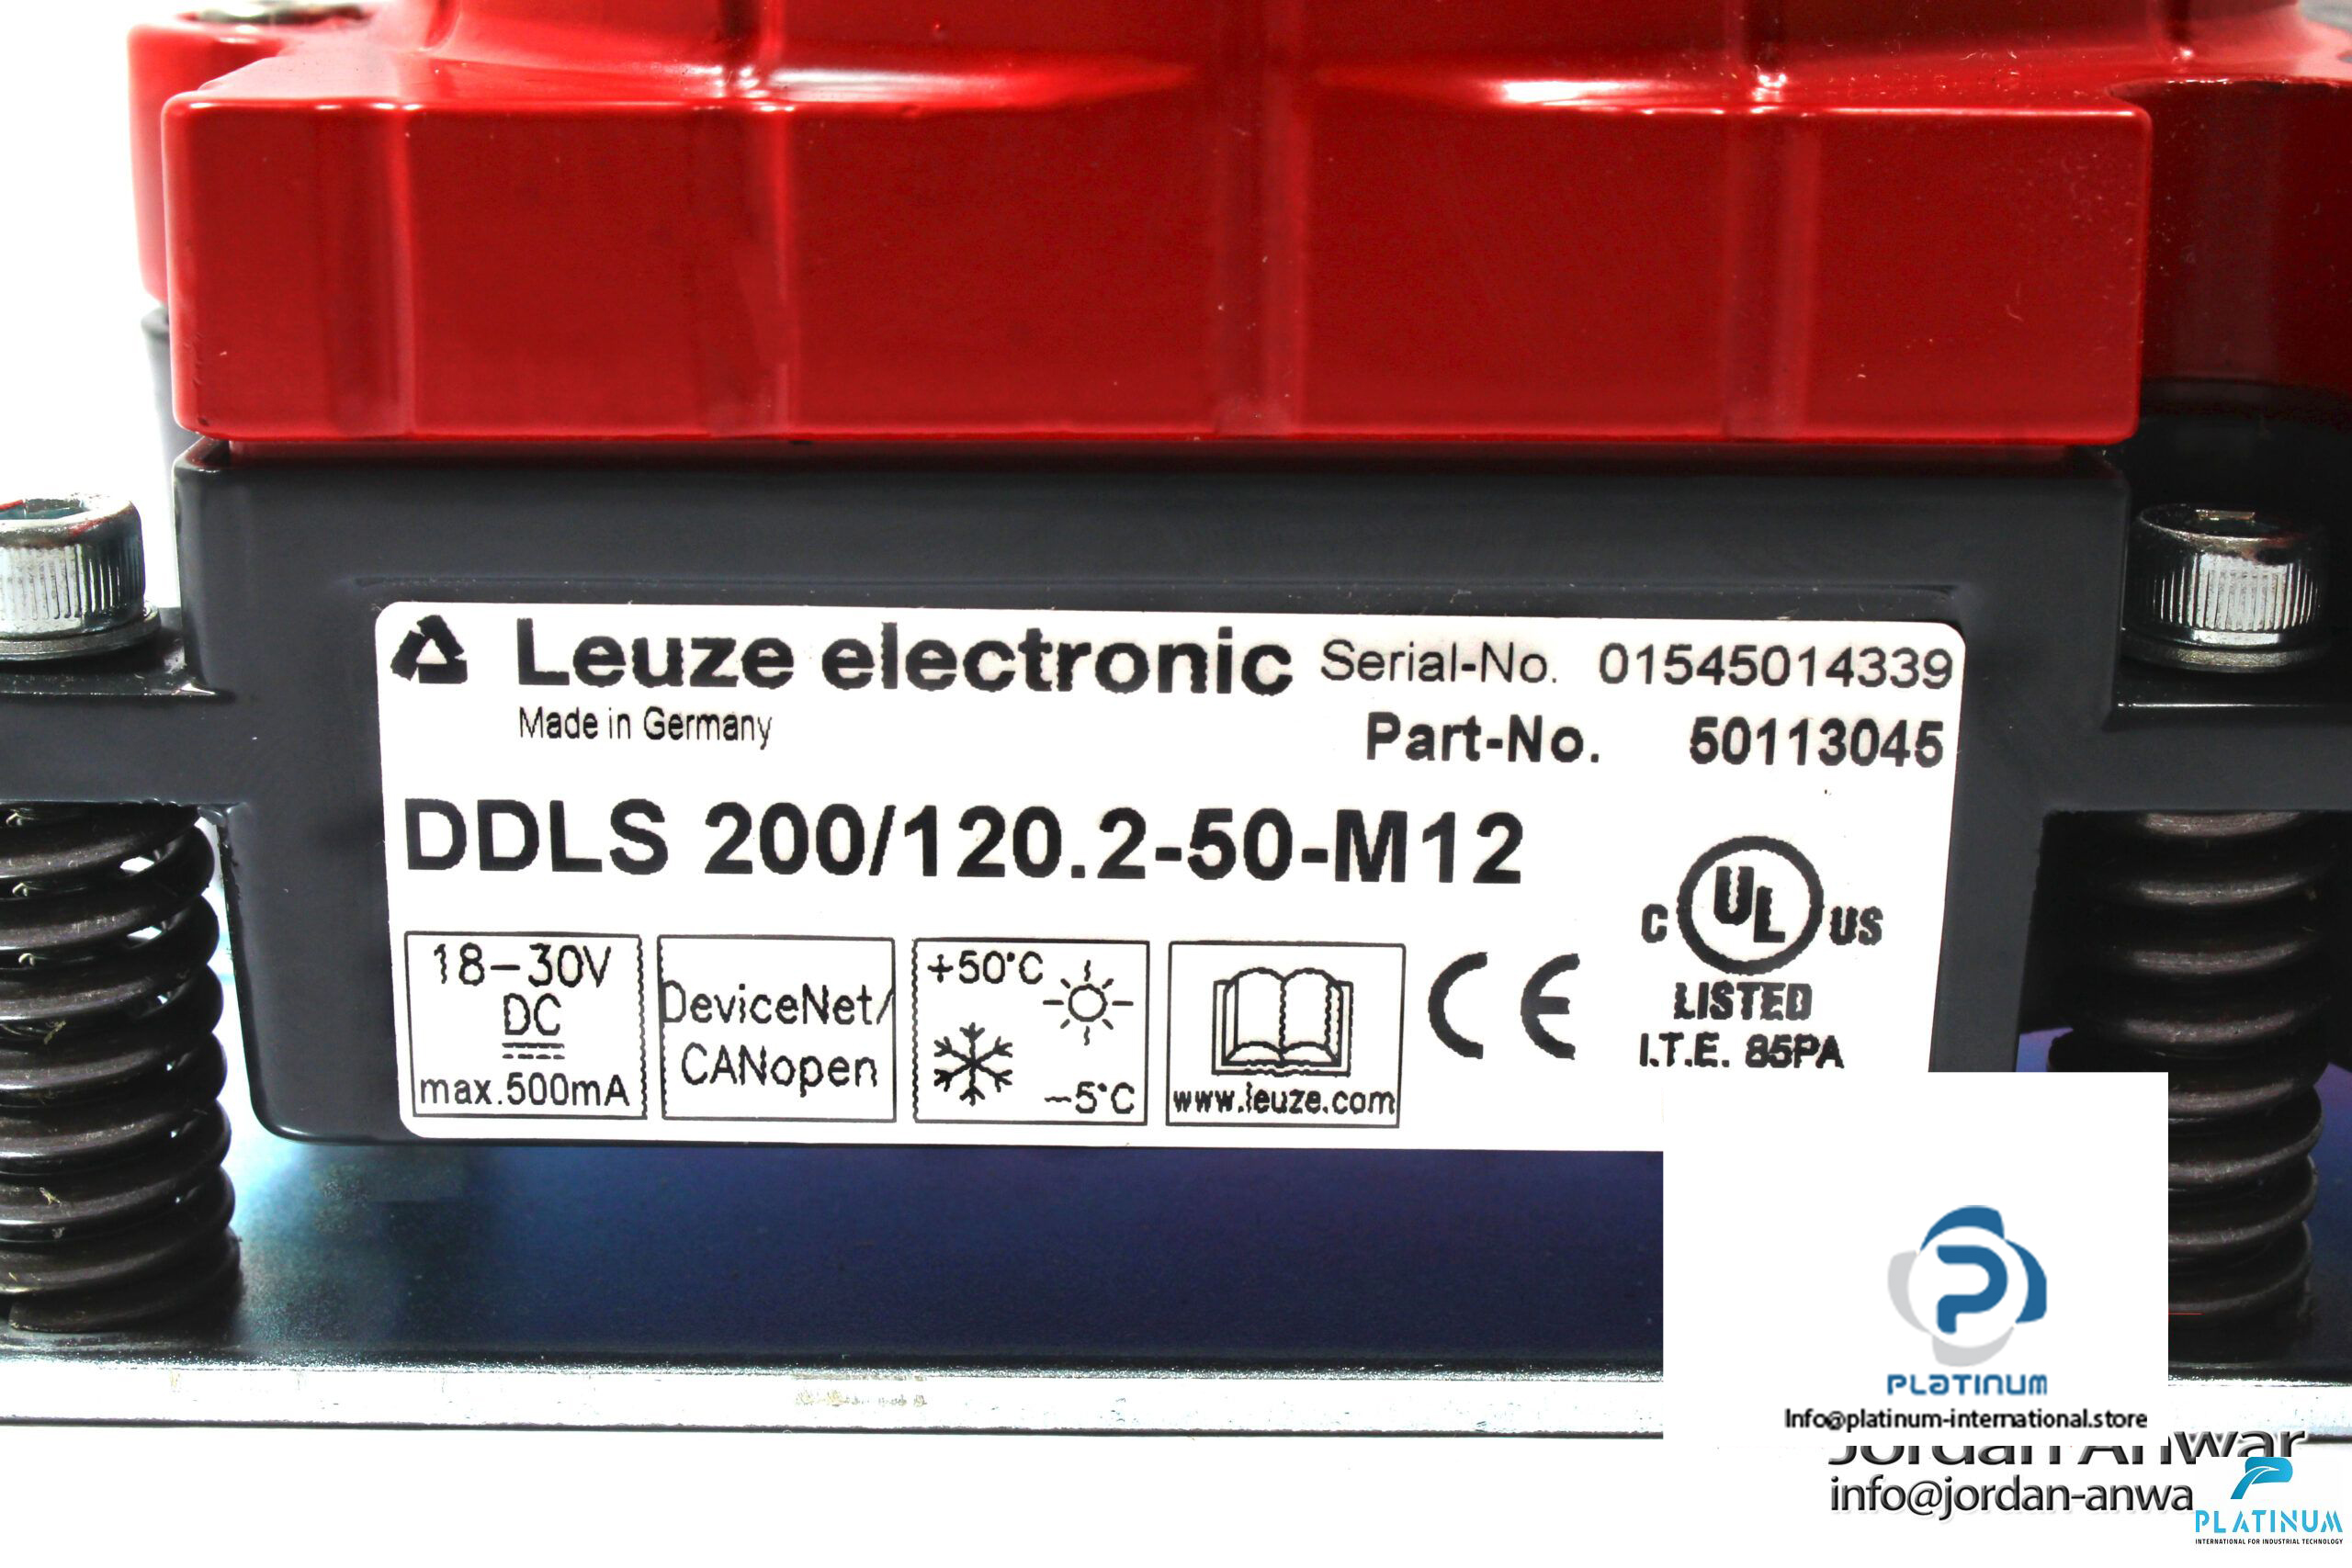 leuze-ddls-200_120-2-50-m12-optical-data-transmission-1